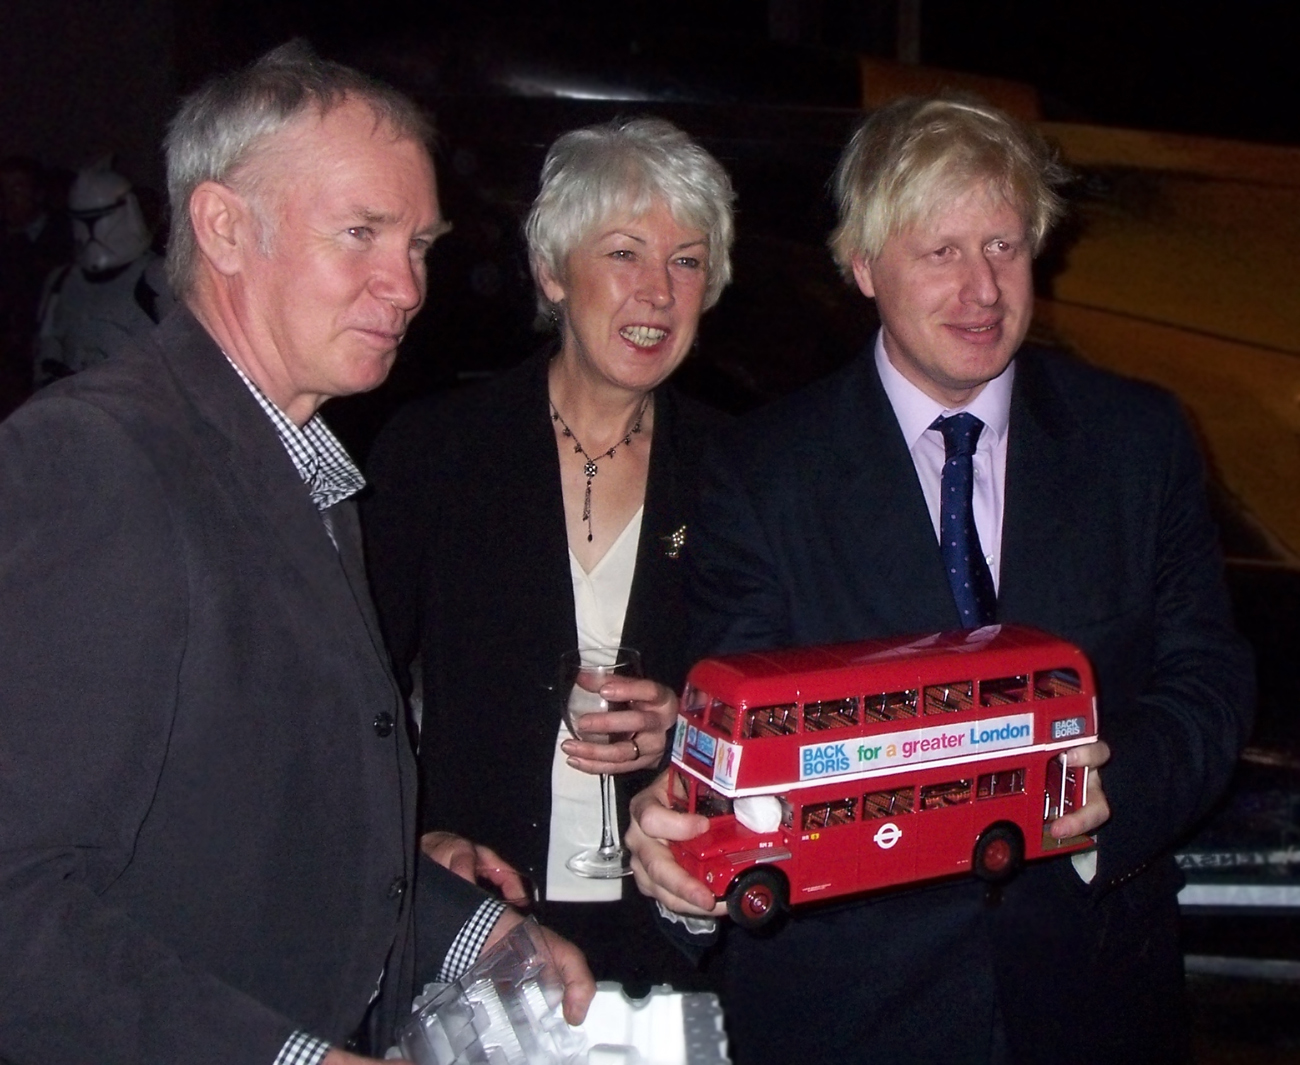 Boris_Johnson_-holding_a_red_model_bus_-2007